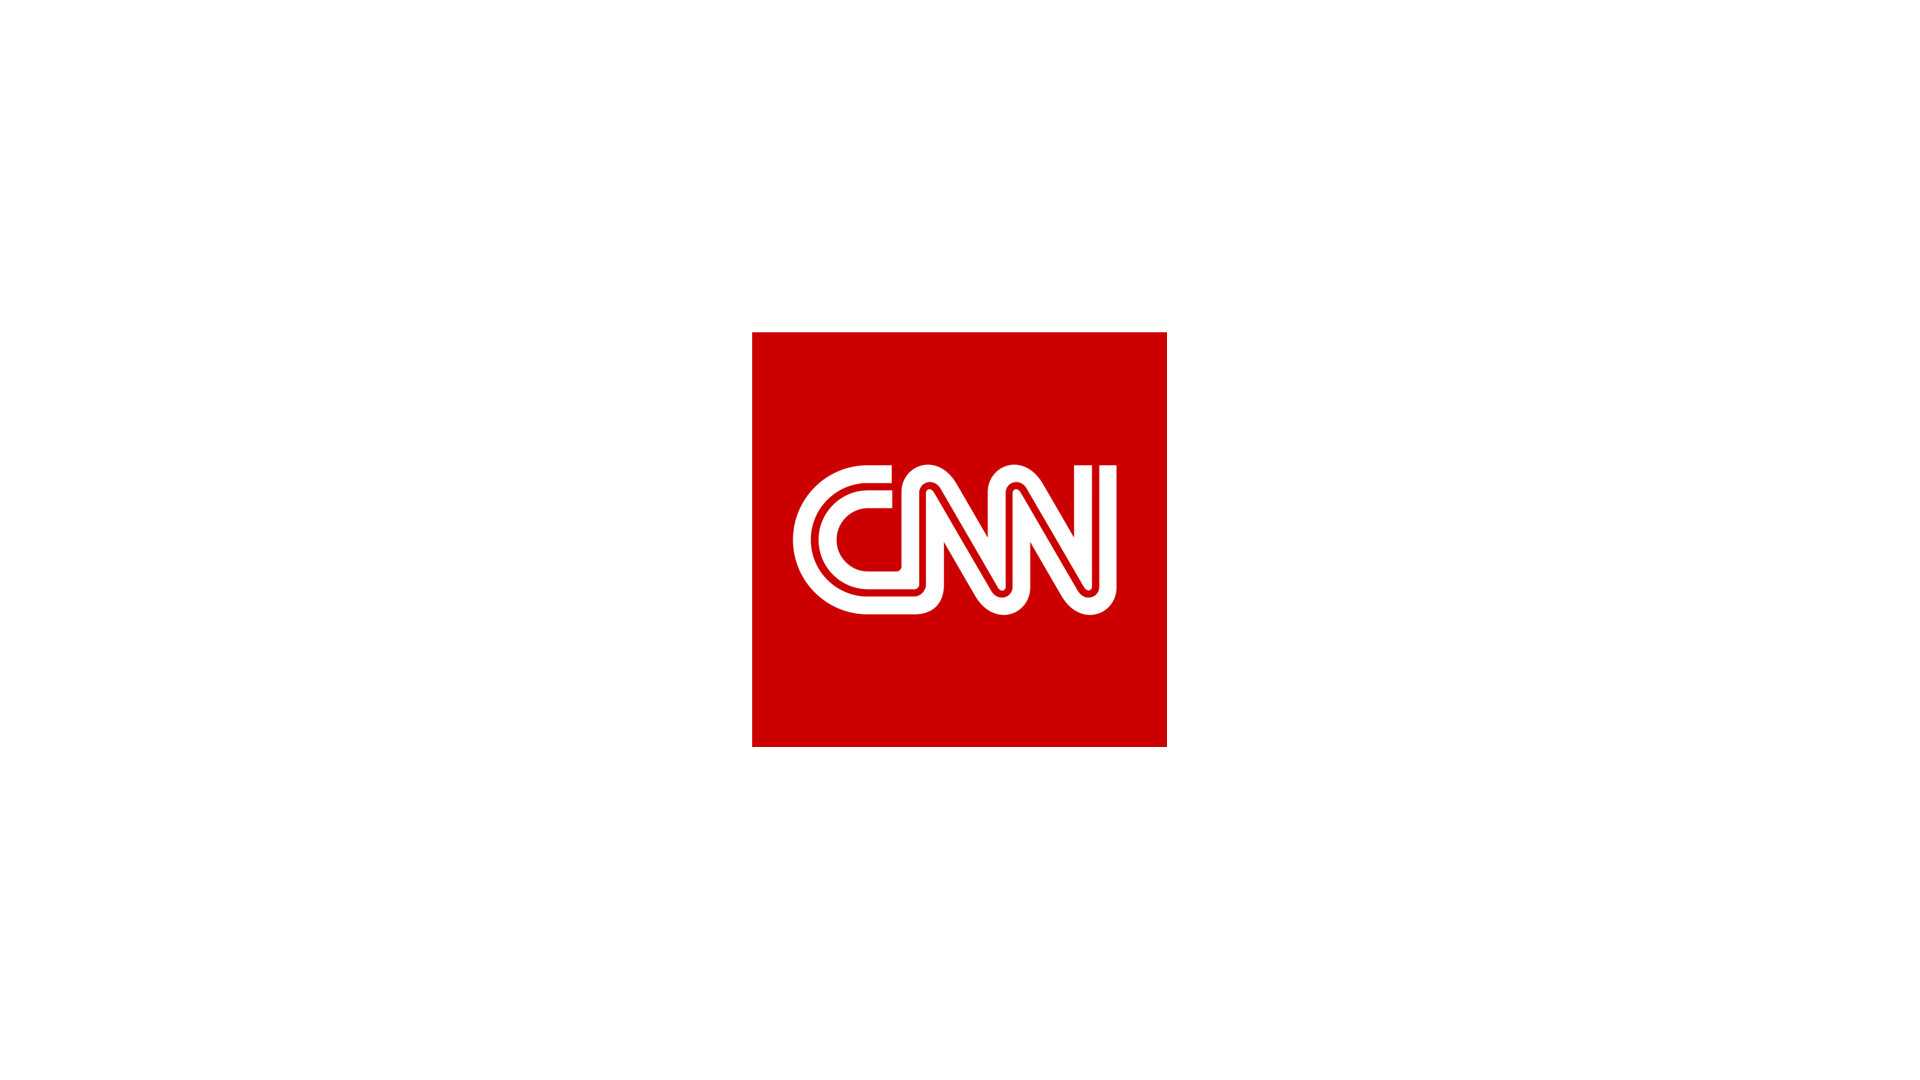 CNN_square_logo.jpg